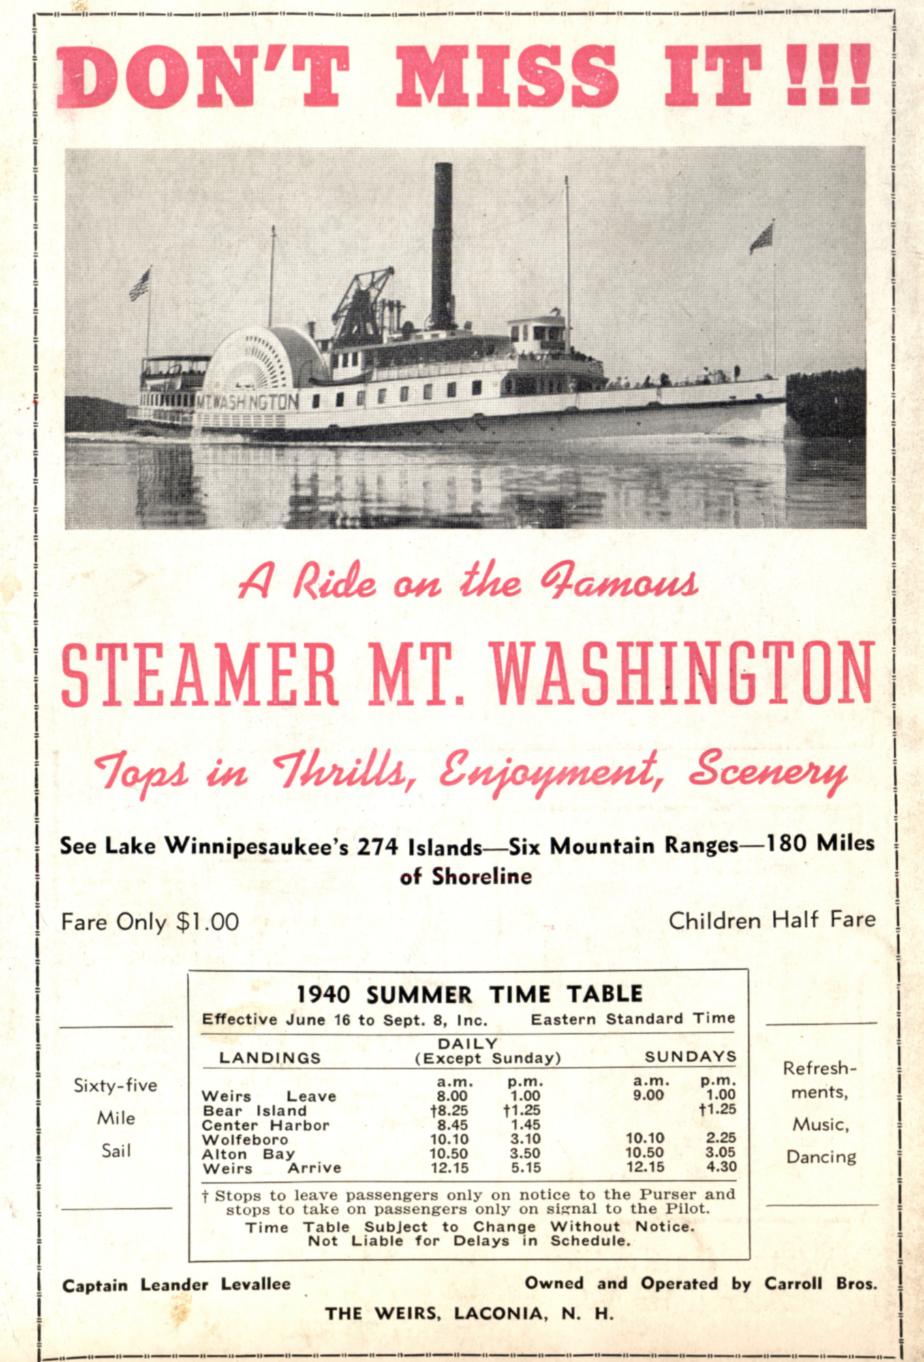 MS Mount Washington Time Table 1940